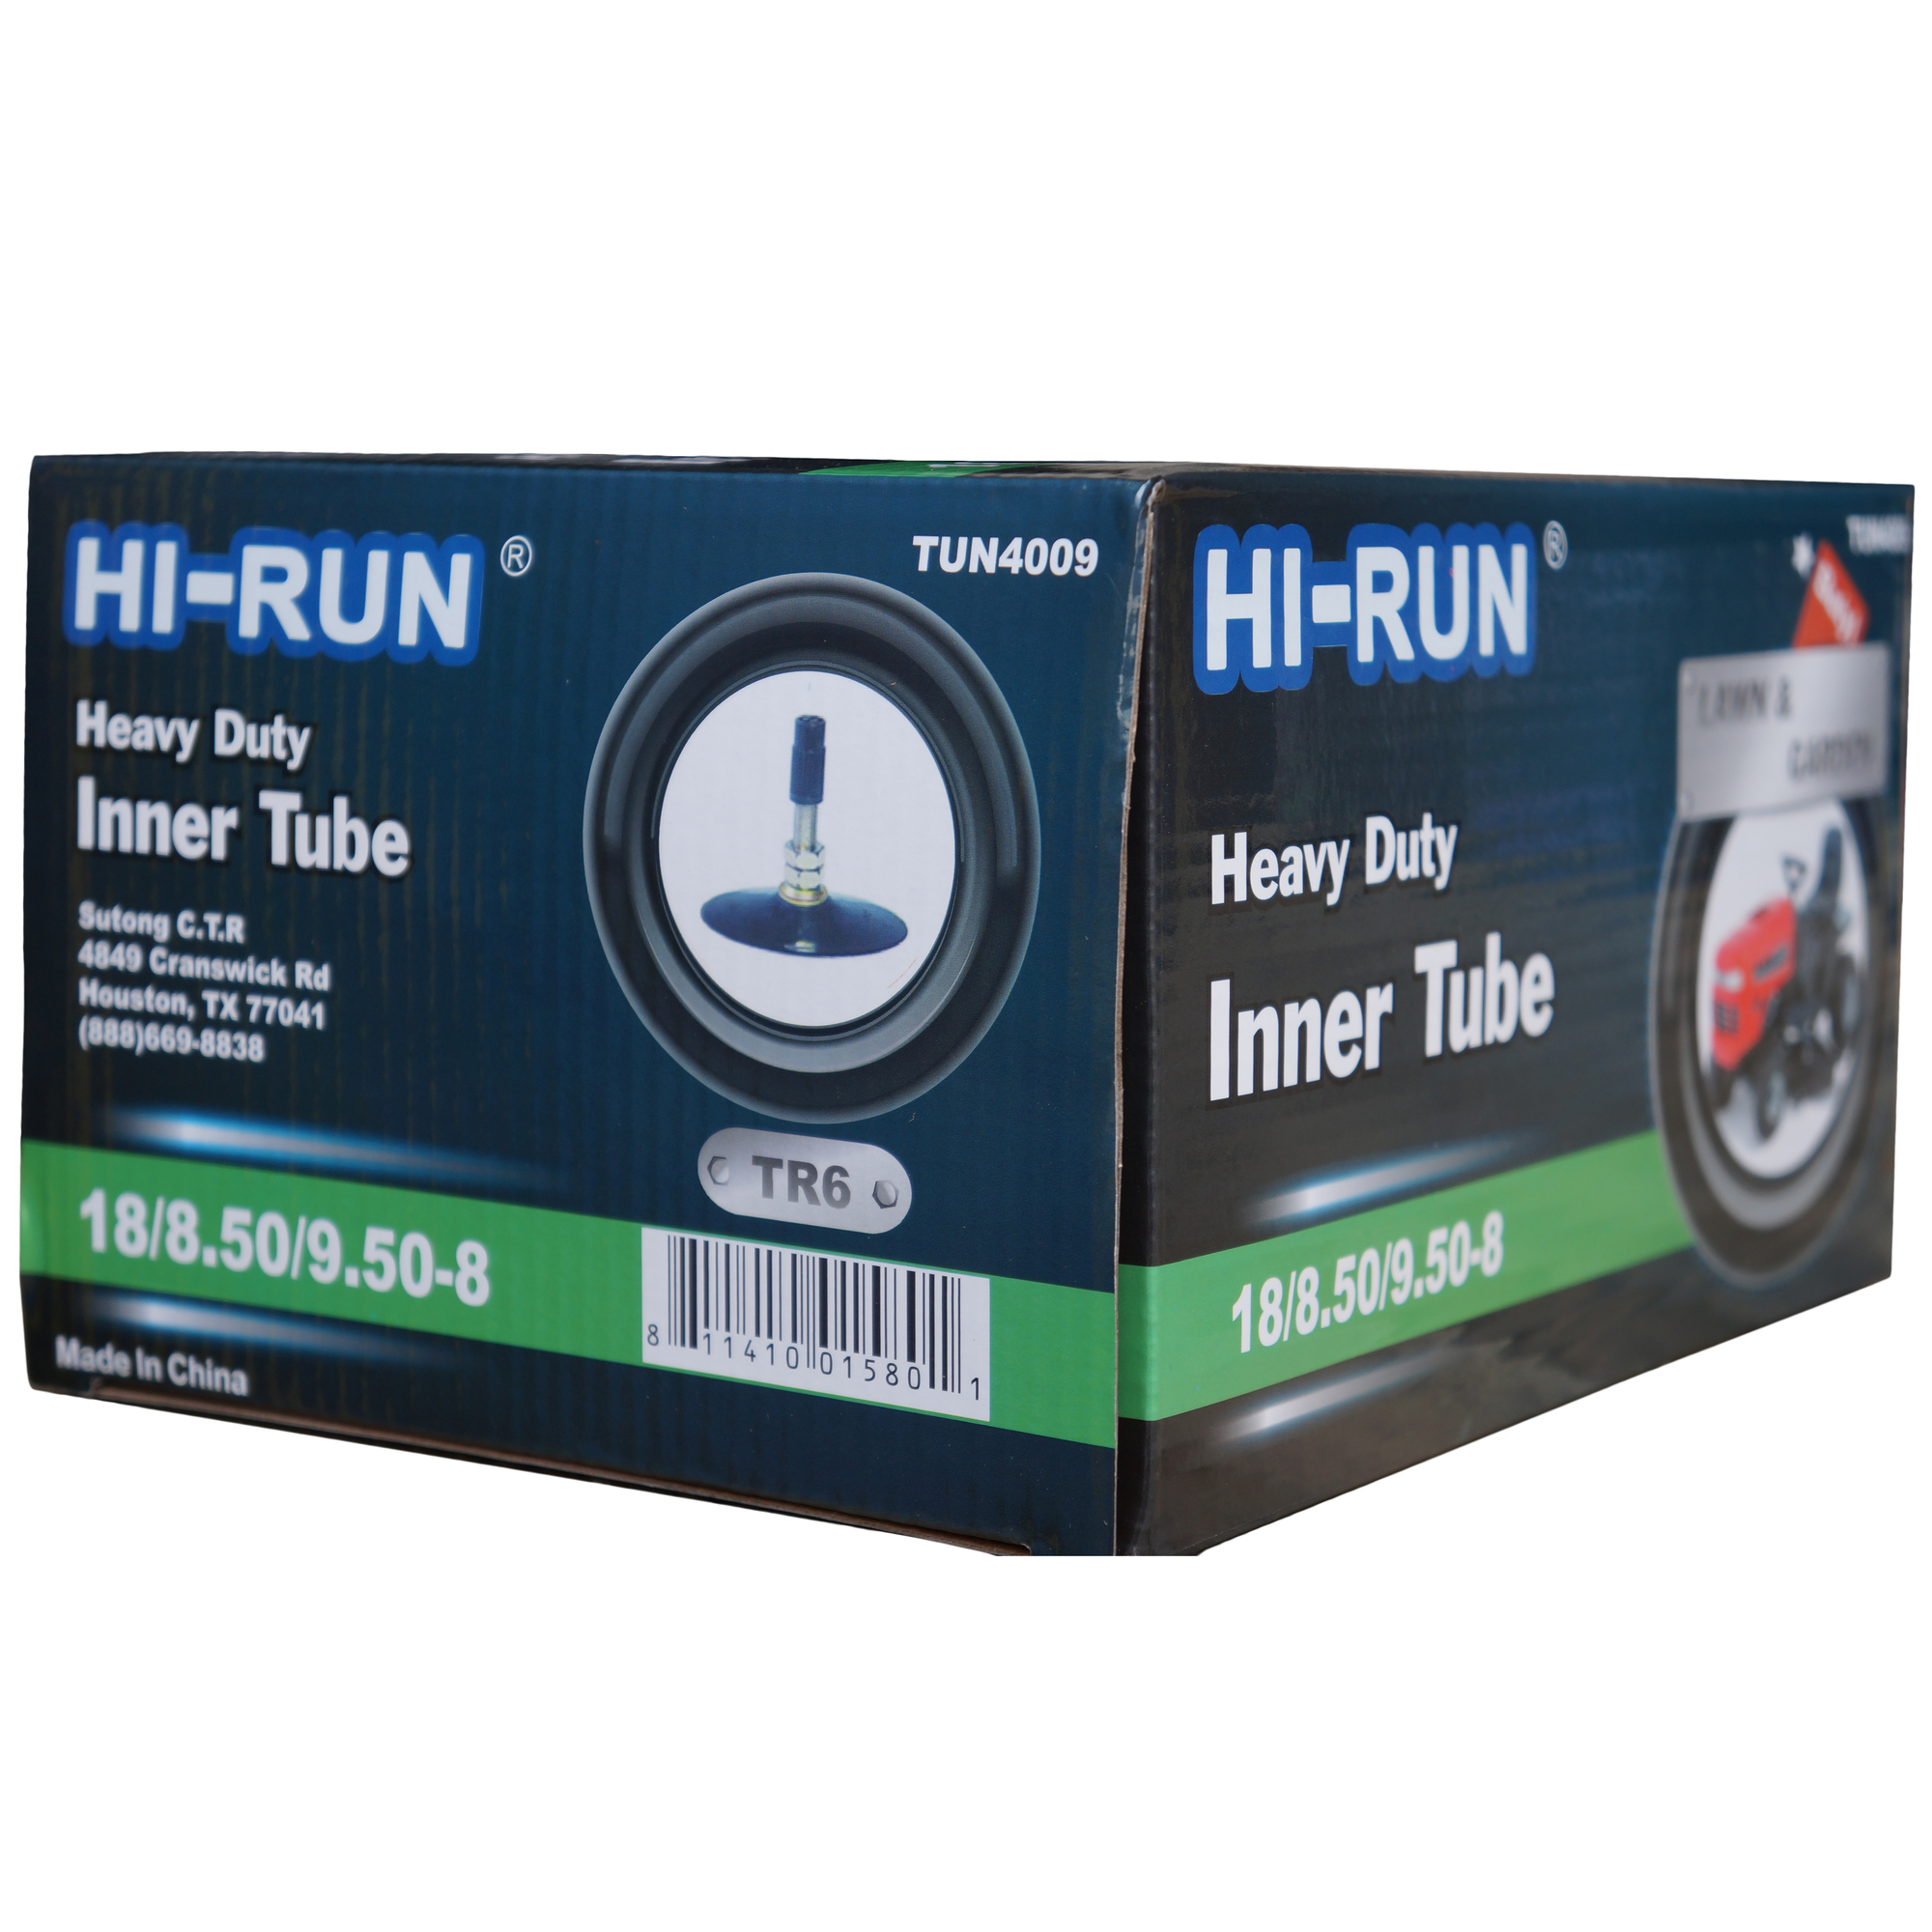 HI-RUN, Tube 18X8.50/9.50-8 (TR6) Lawn Garden, Fits Rim Size 8 in, Included (qty.) 1 Model TUN4009